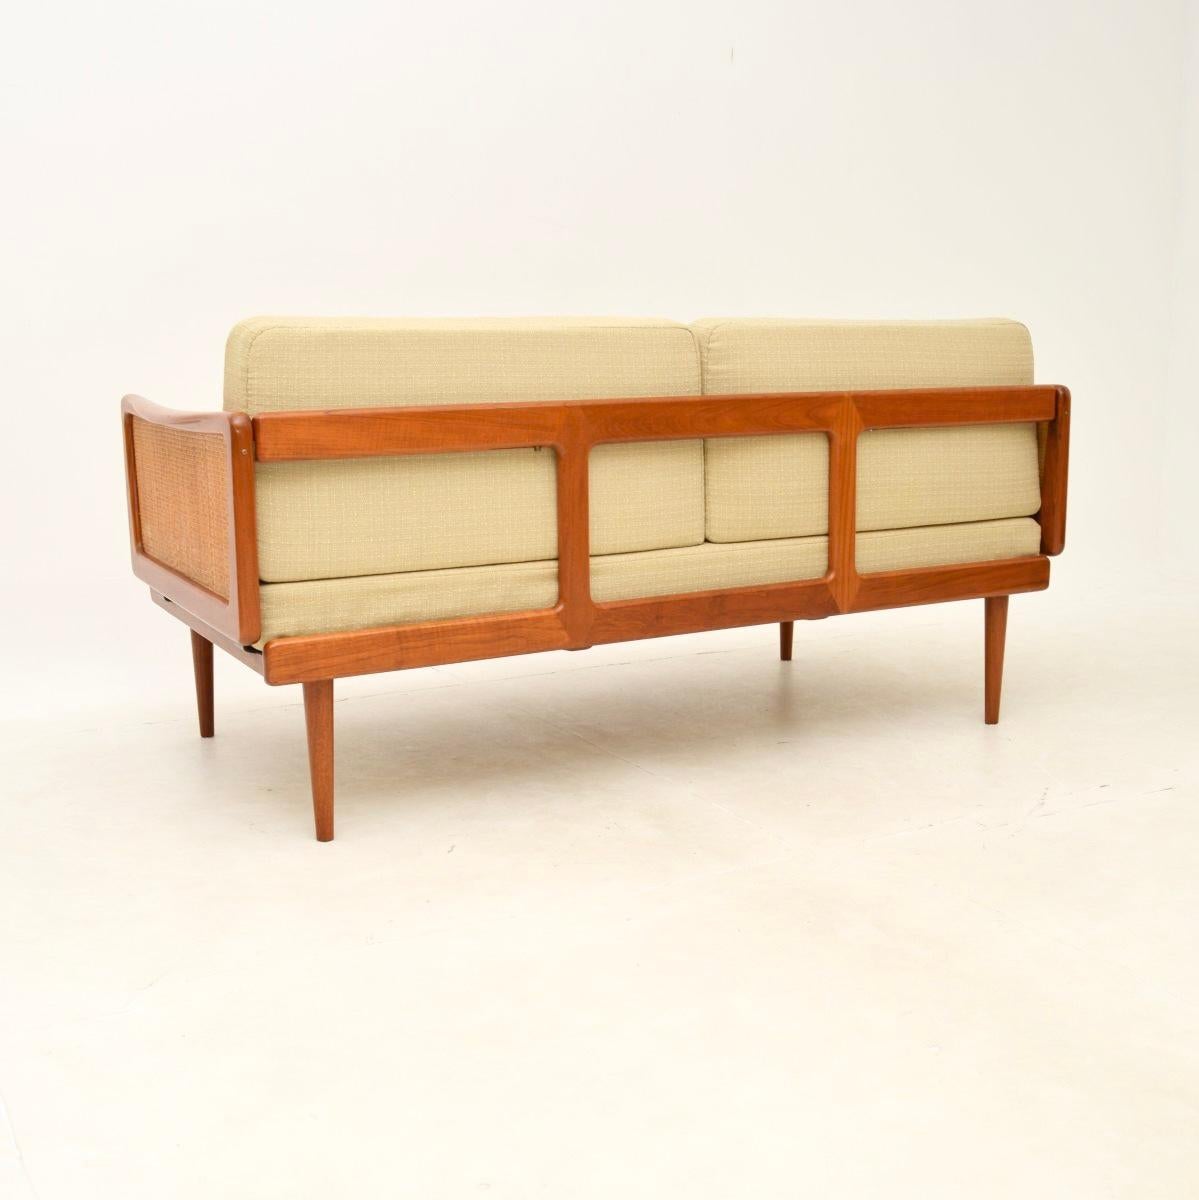 Mid-20th Century Danish Vintage Teak Sofa Bed by Peter Hvidt and Orla Mølgaard-Nielsen